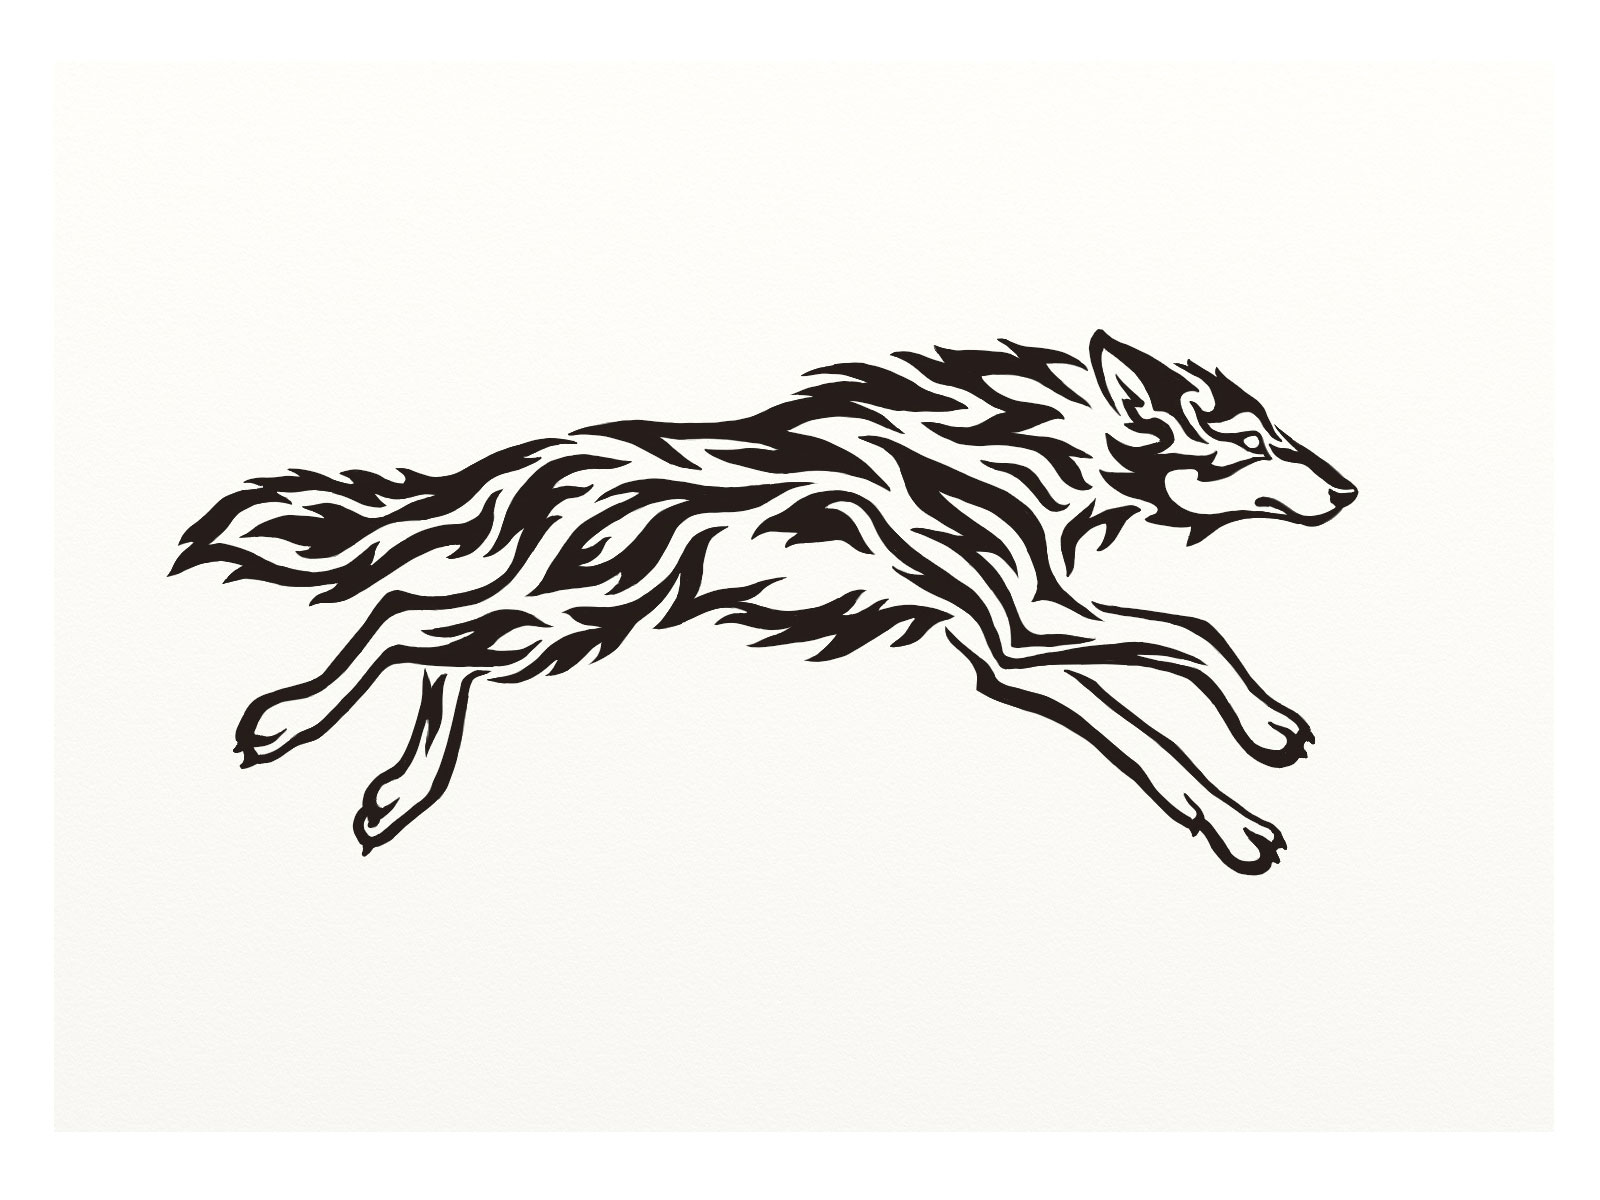 Free designs - Wolf is running wallpaper